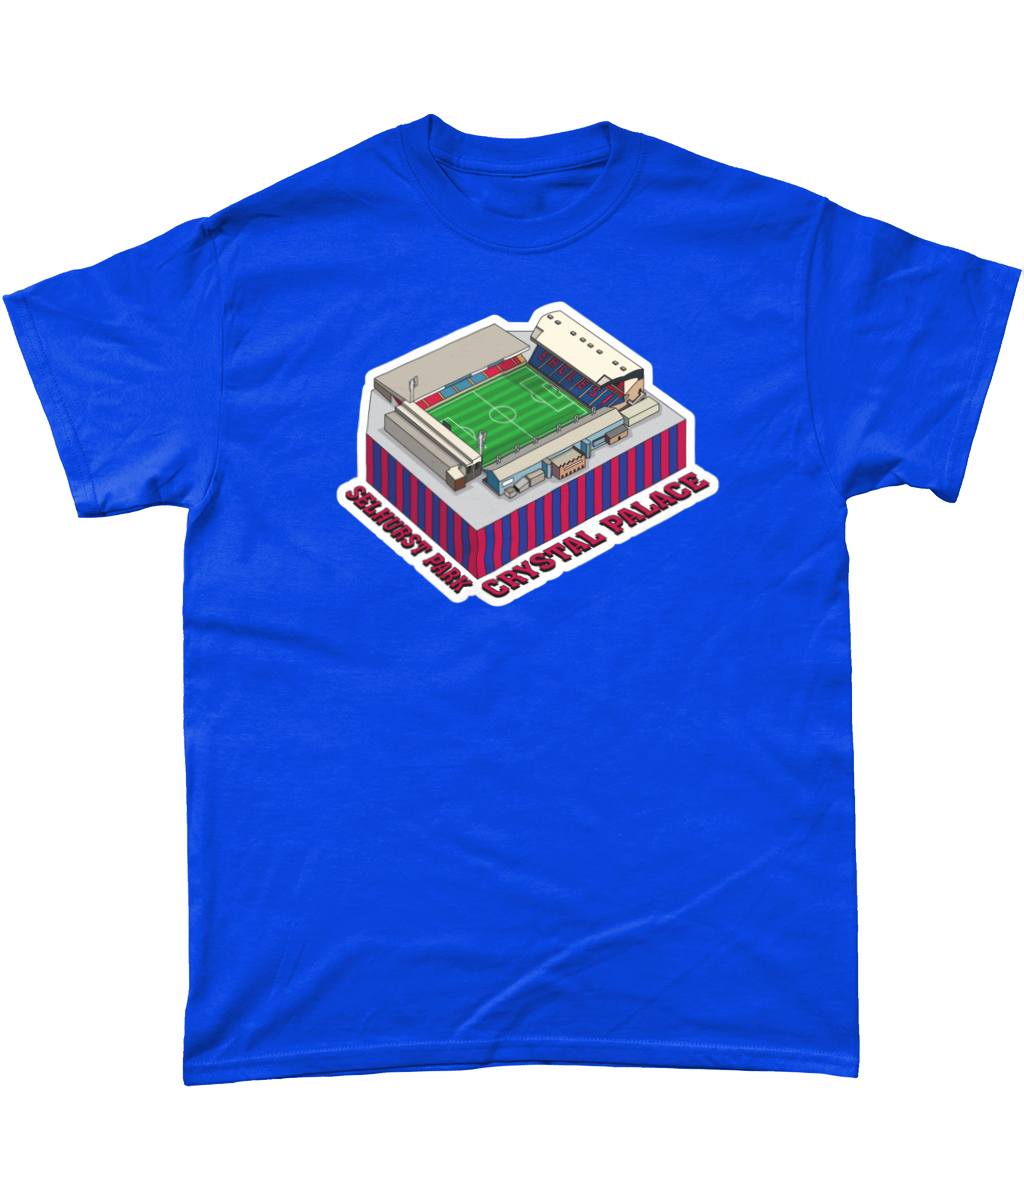 Crystal Palace FC Sports Stadium Minimalist Football Soccer Series Kids T- Shirt by Design Turnpike - Instaprints